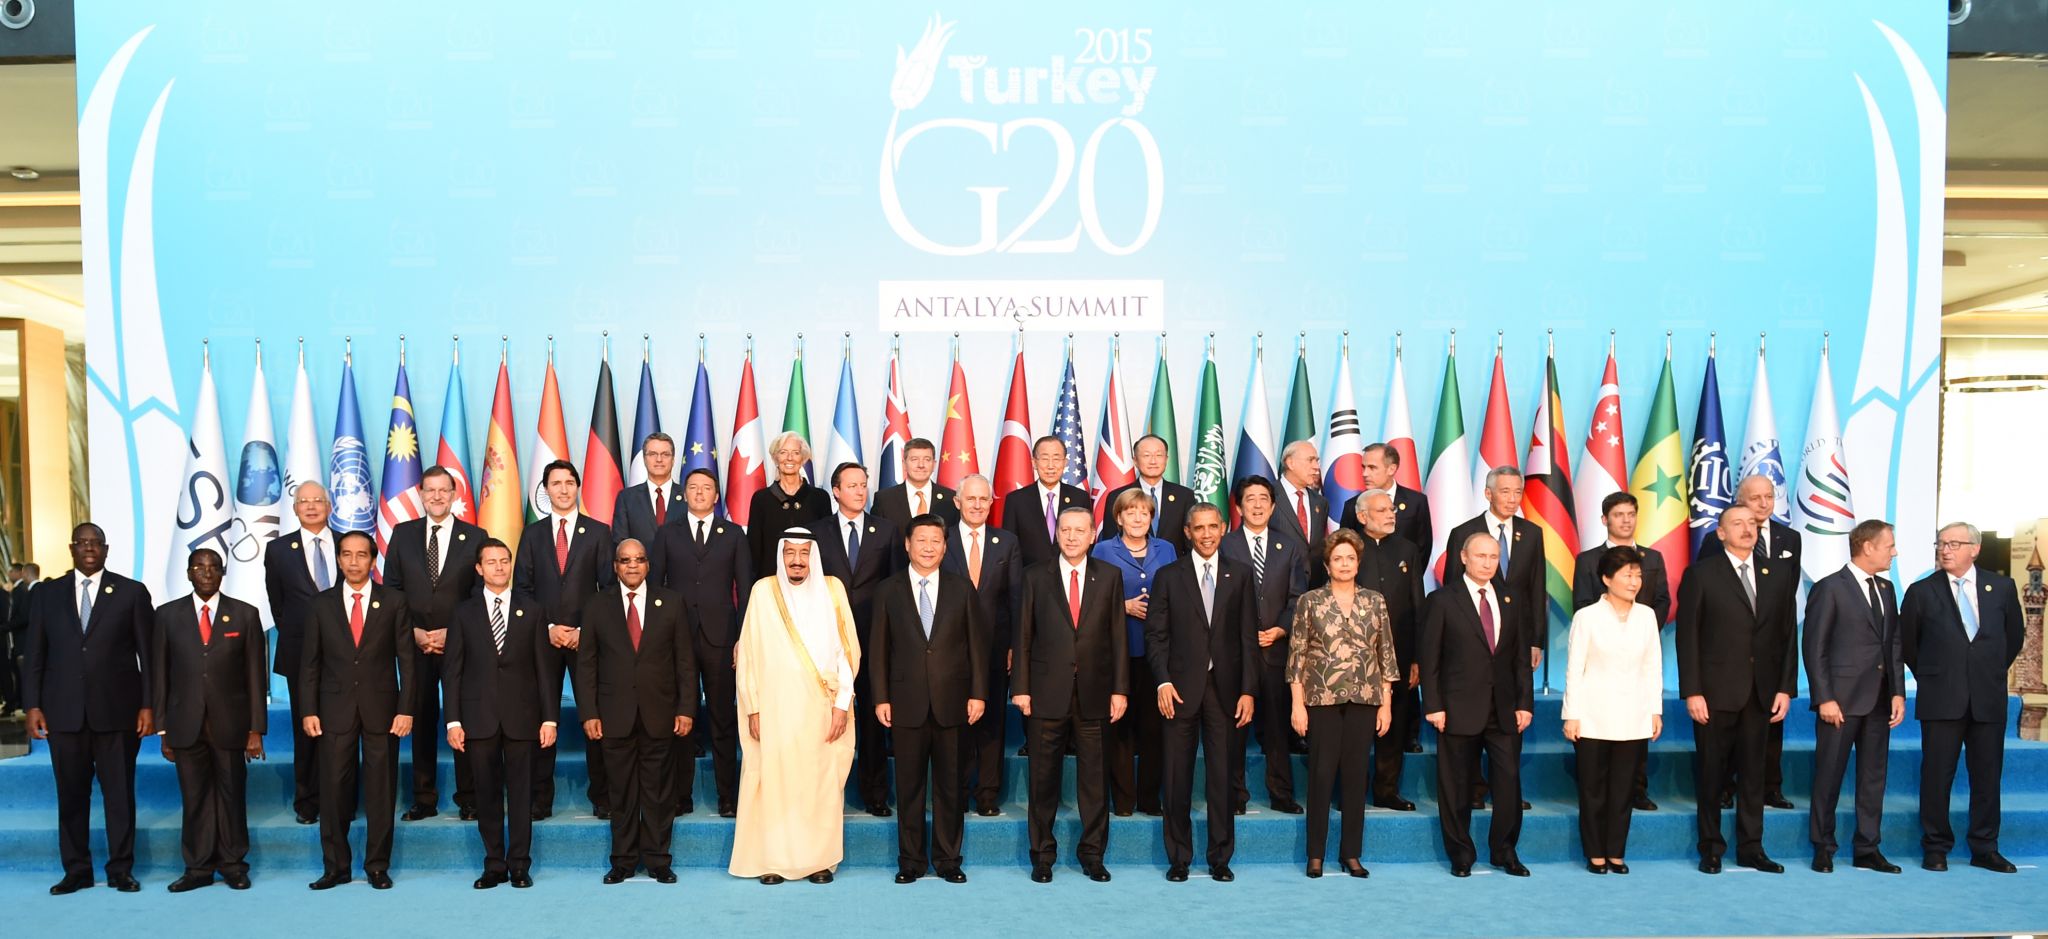 http://www.net4info.de/photos/cpg/albums/userpics/10002/2015_G20_Antalya_summit.jpg